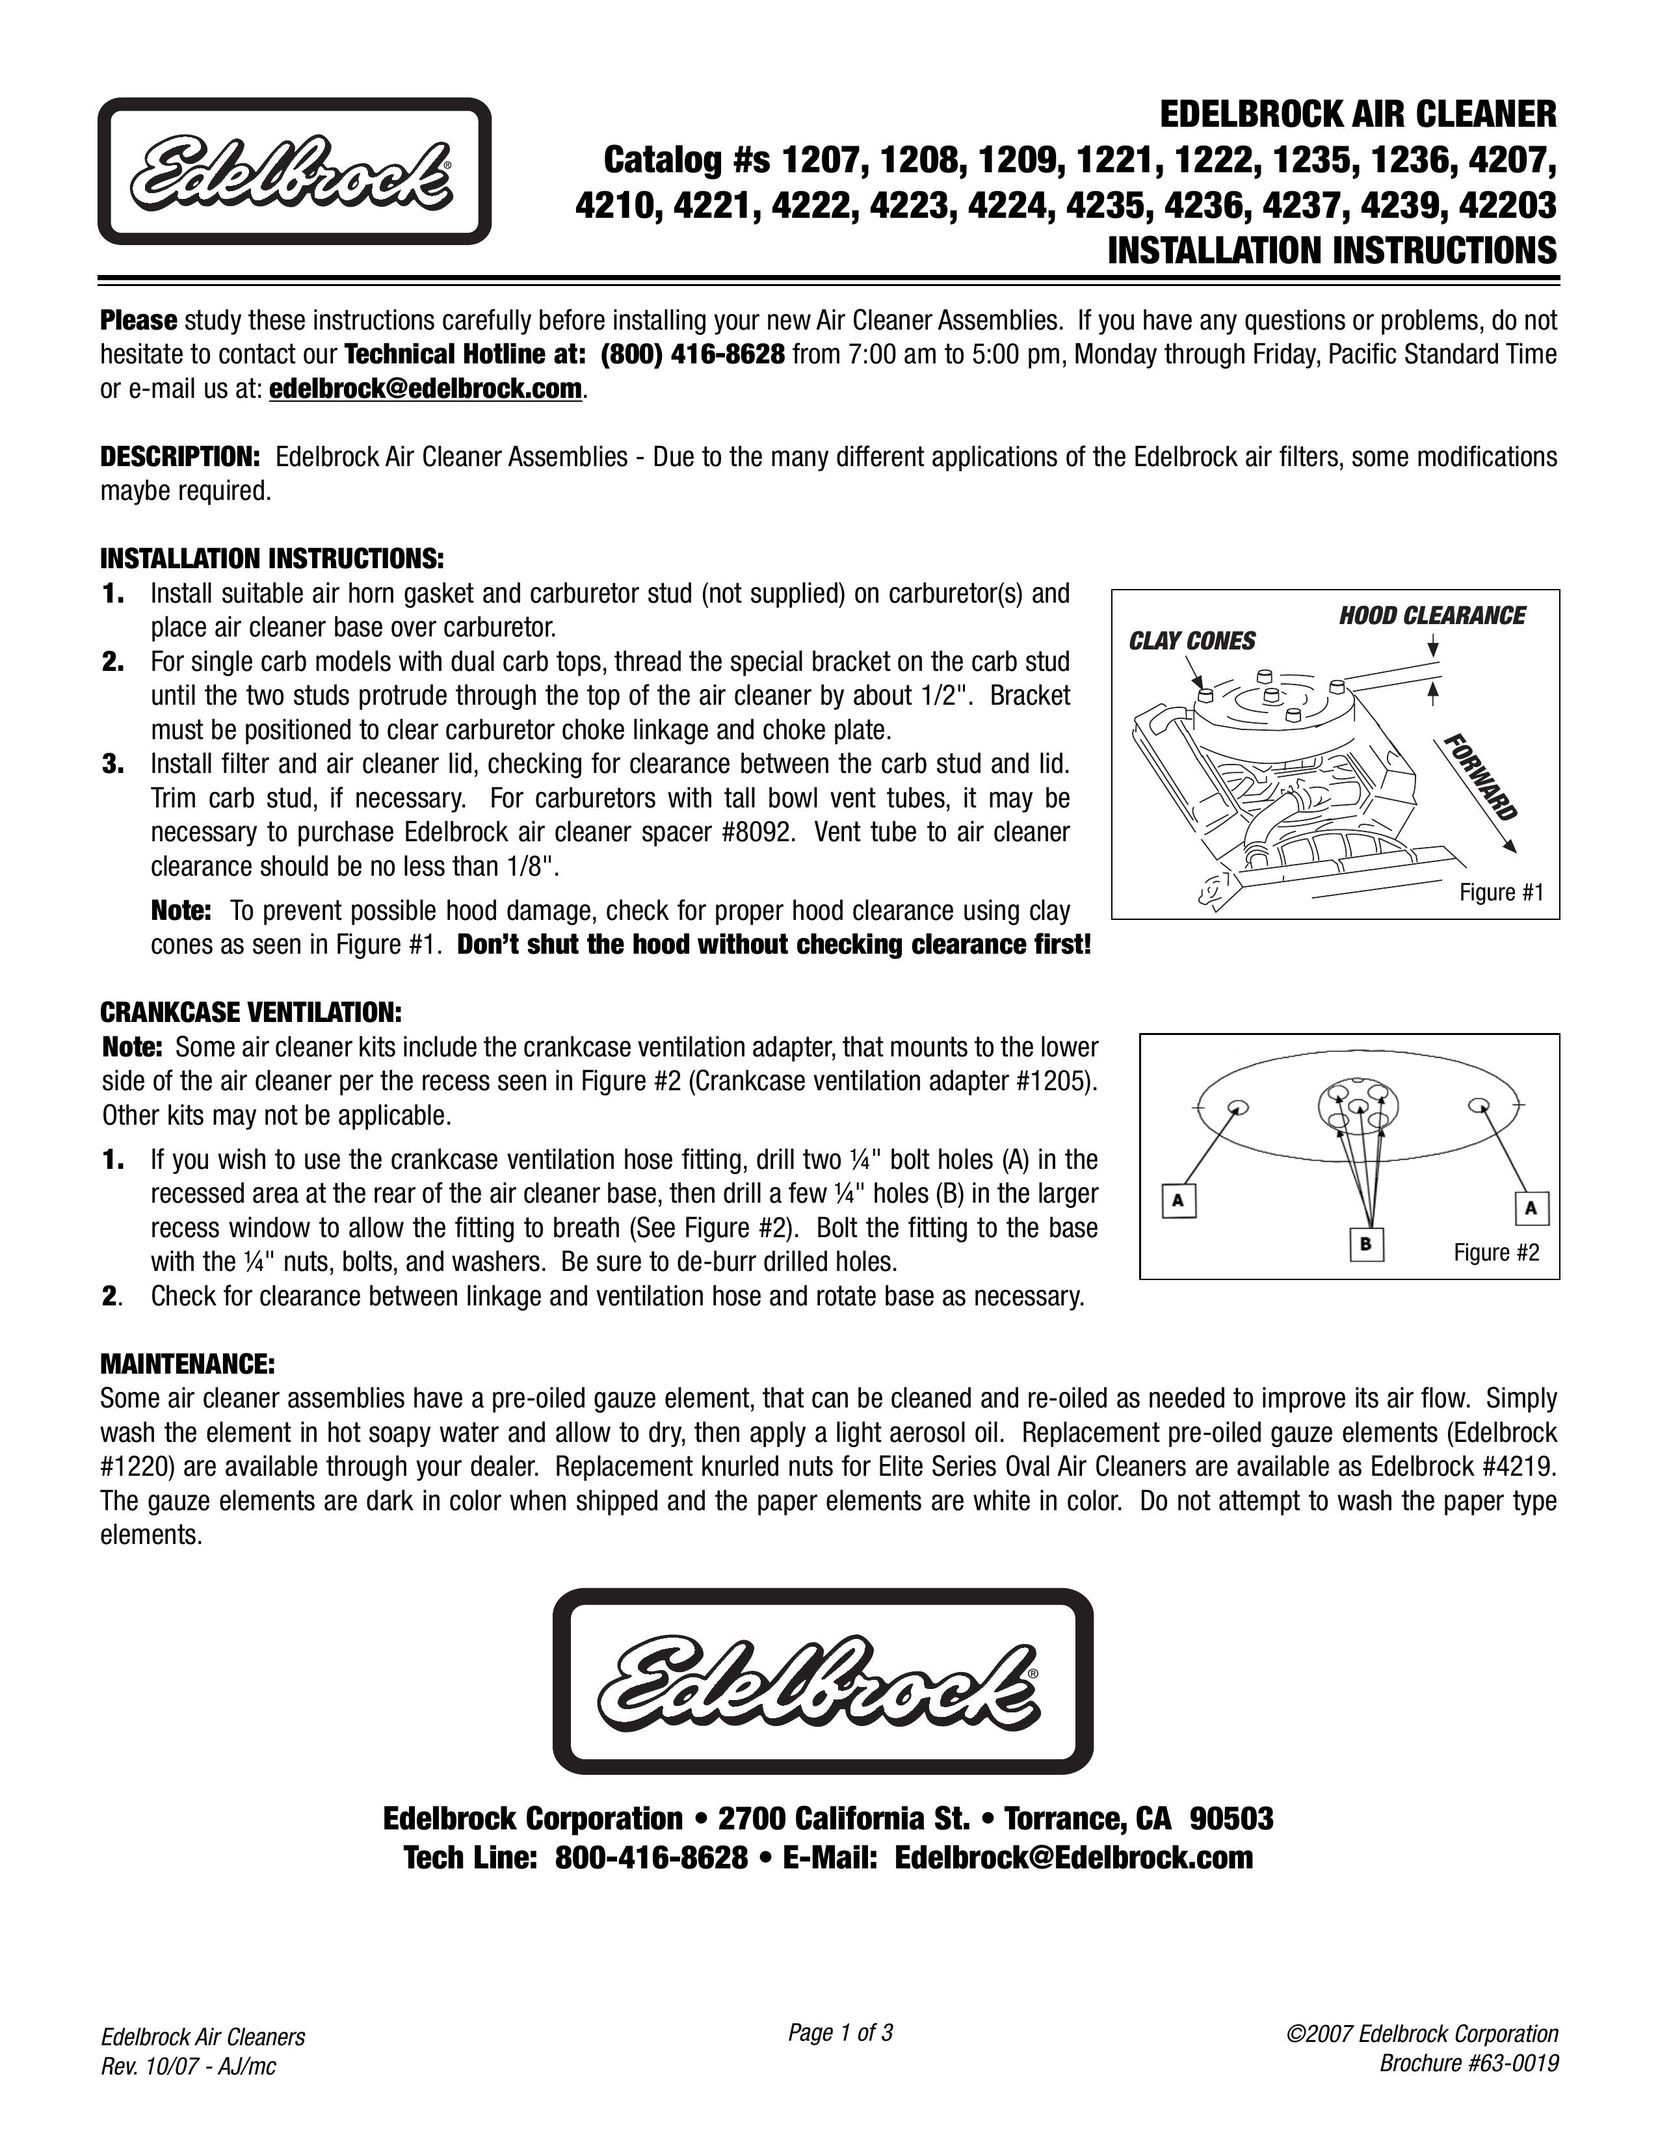 Edelbrock 4237 Air Cleaner User Manual